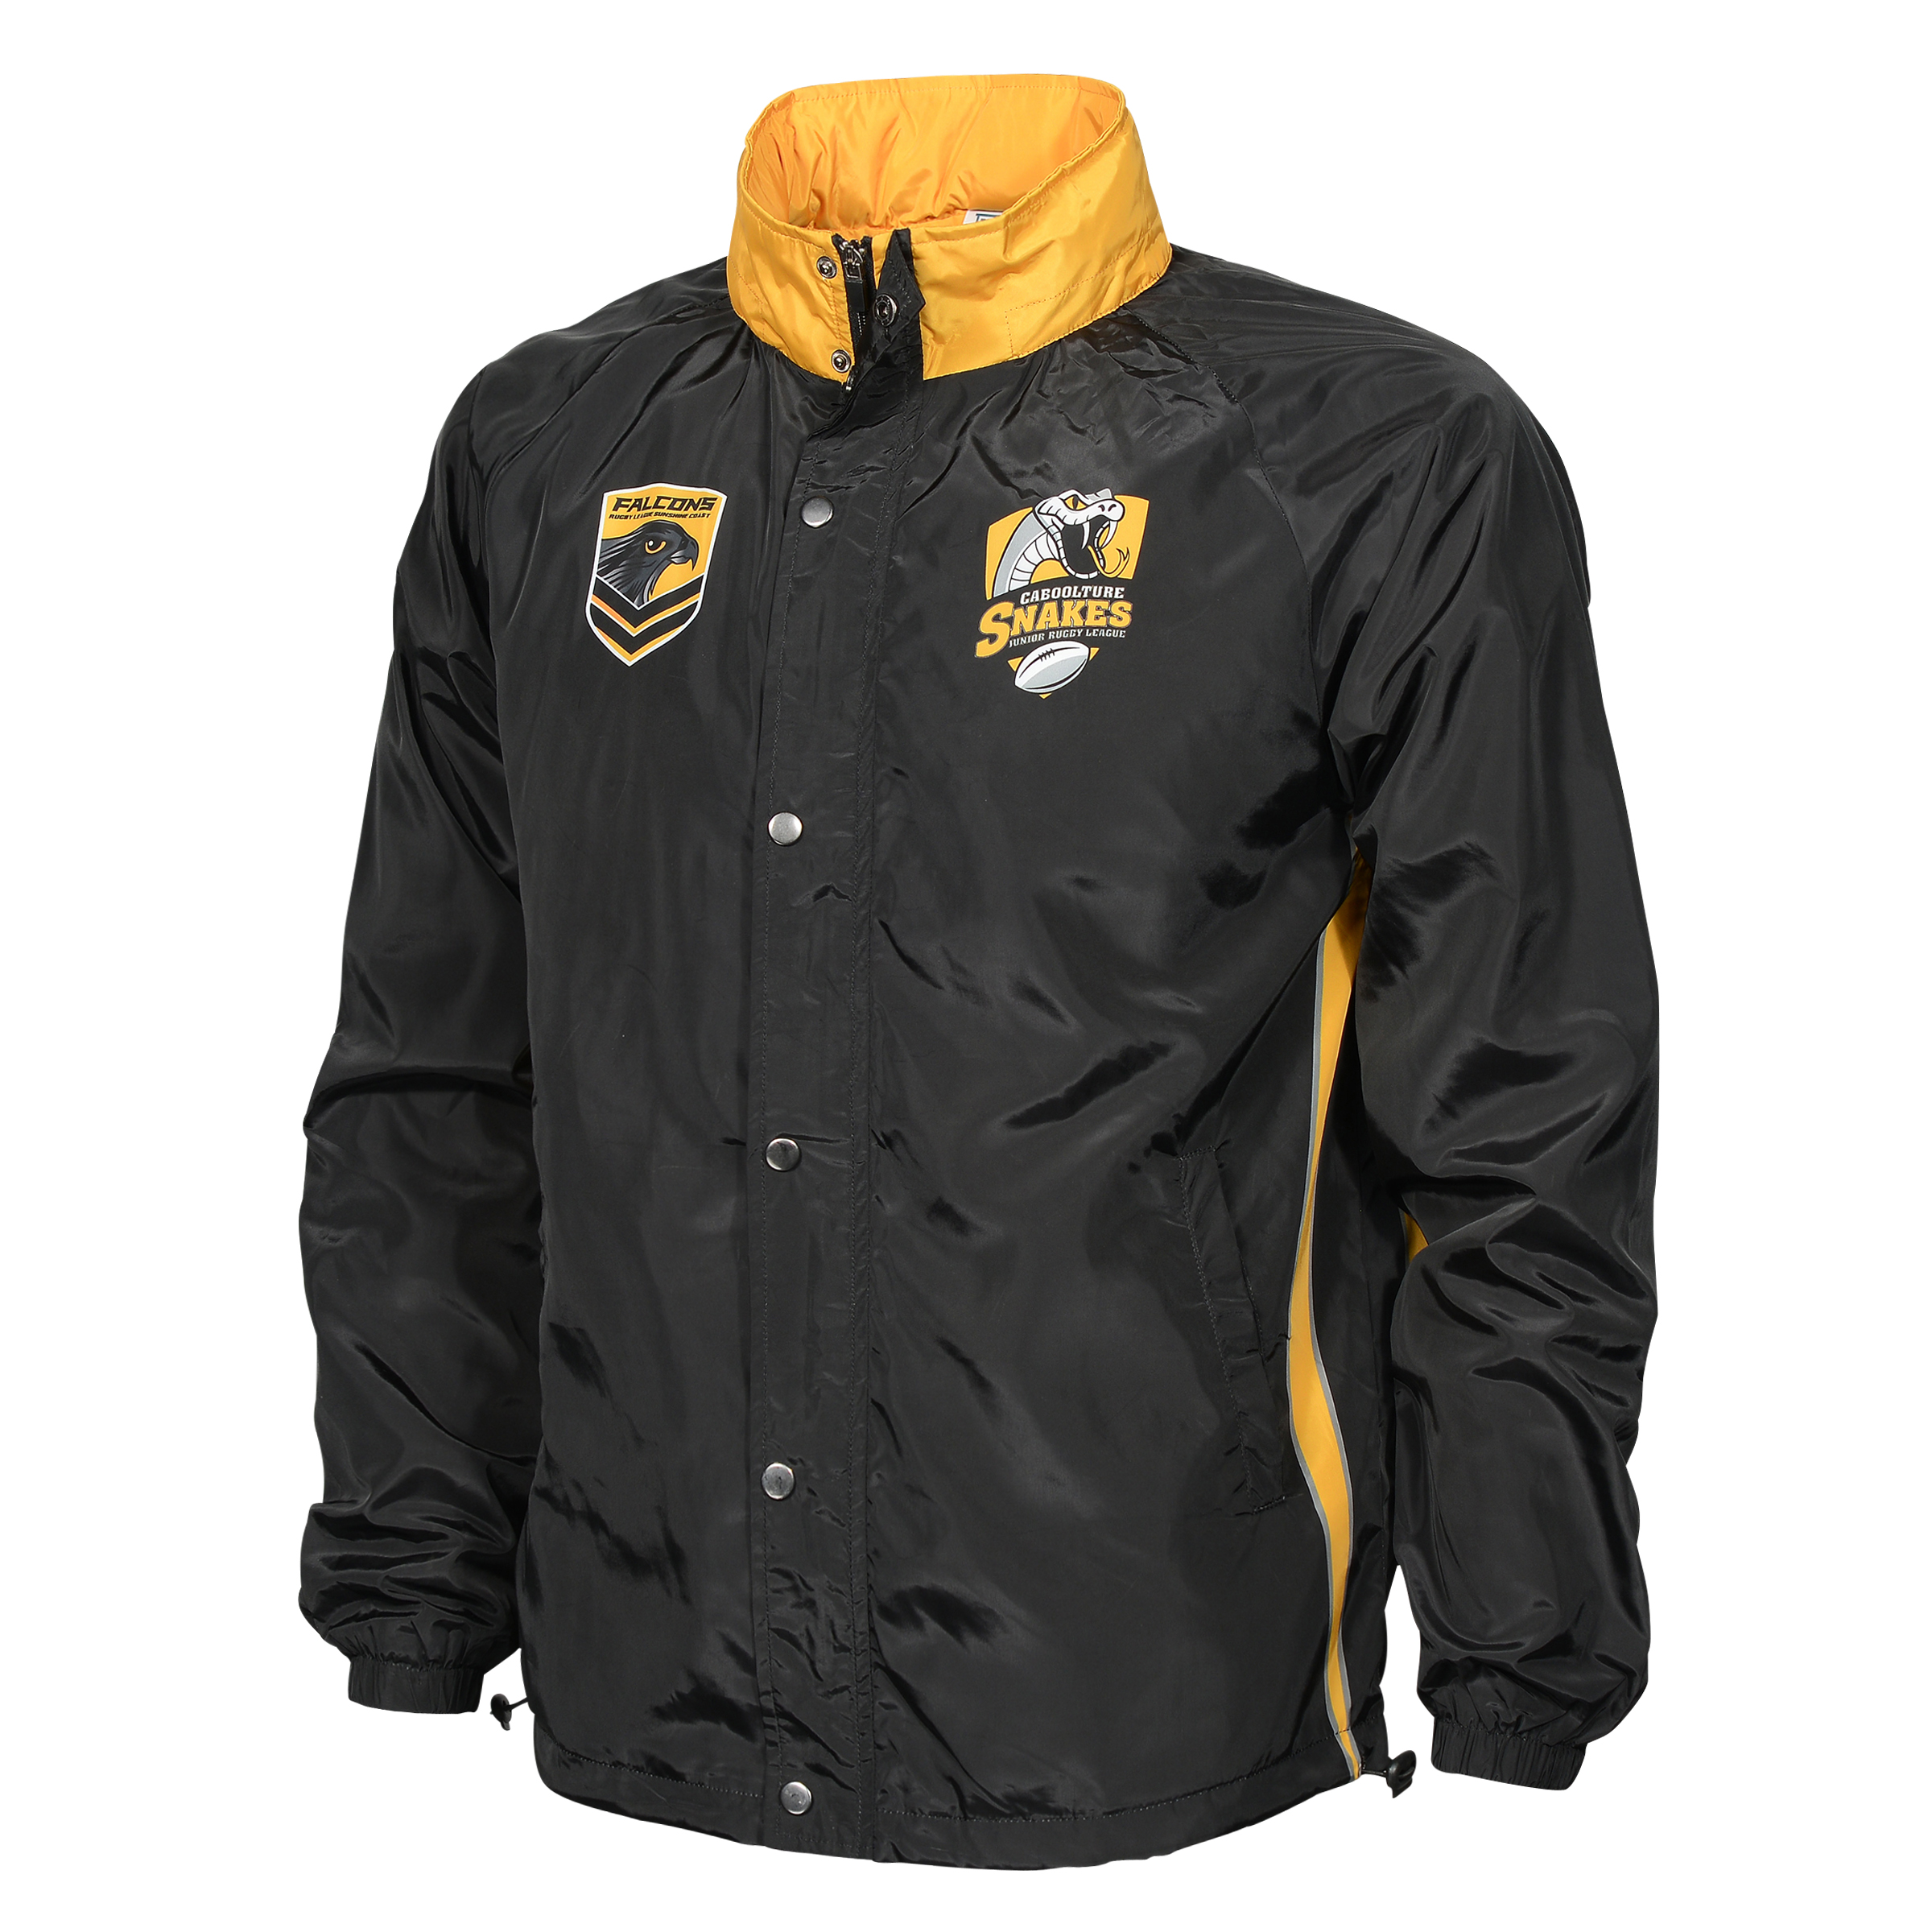 Custom Water Resistant Jacket | AFL Track Jacket | Brisbane Sportswear